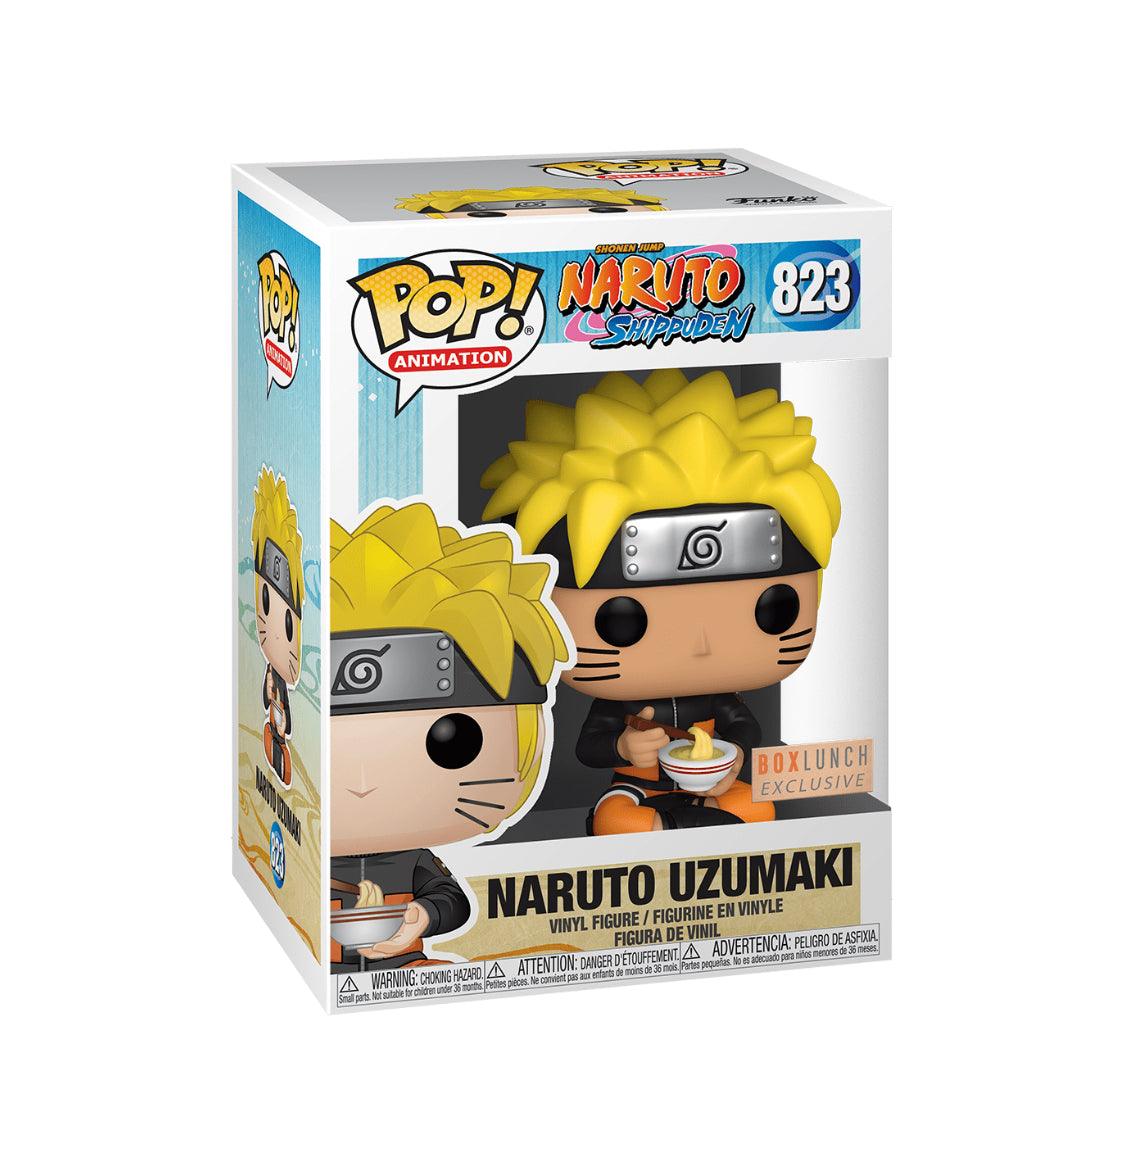 Pop! Animation - Naruto - Naruto Uzumaki - #823 - Box Lunch EXCLUSIVE - Hobby Champion Inc